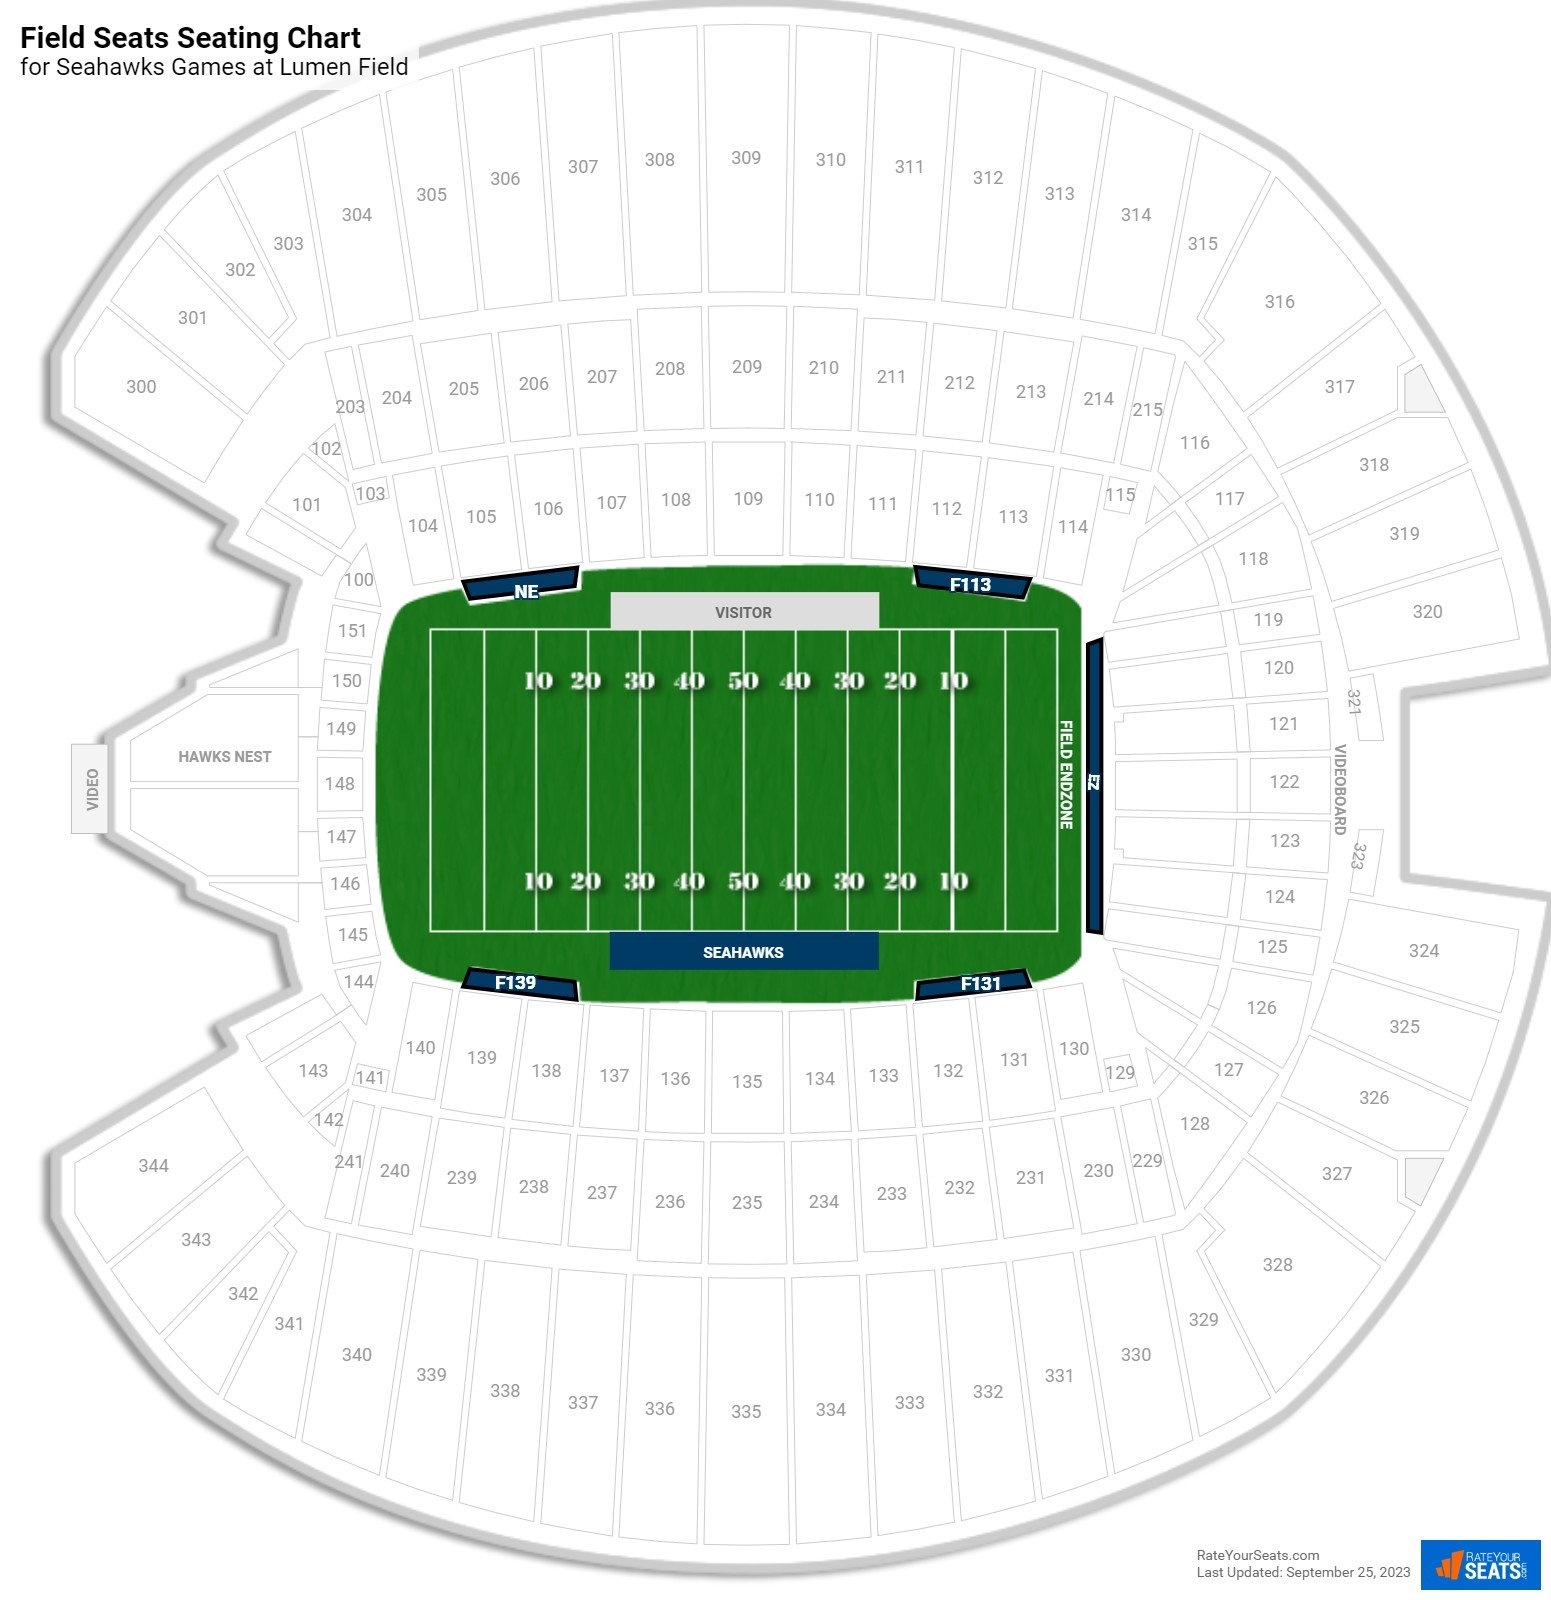 Seahawks Field Seats Seating Chart at Lumen Field